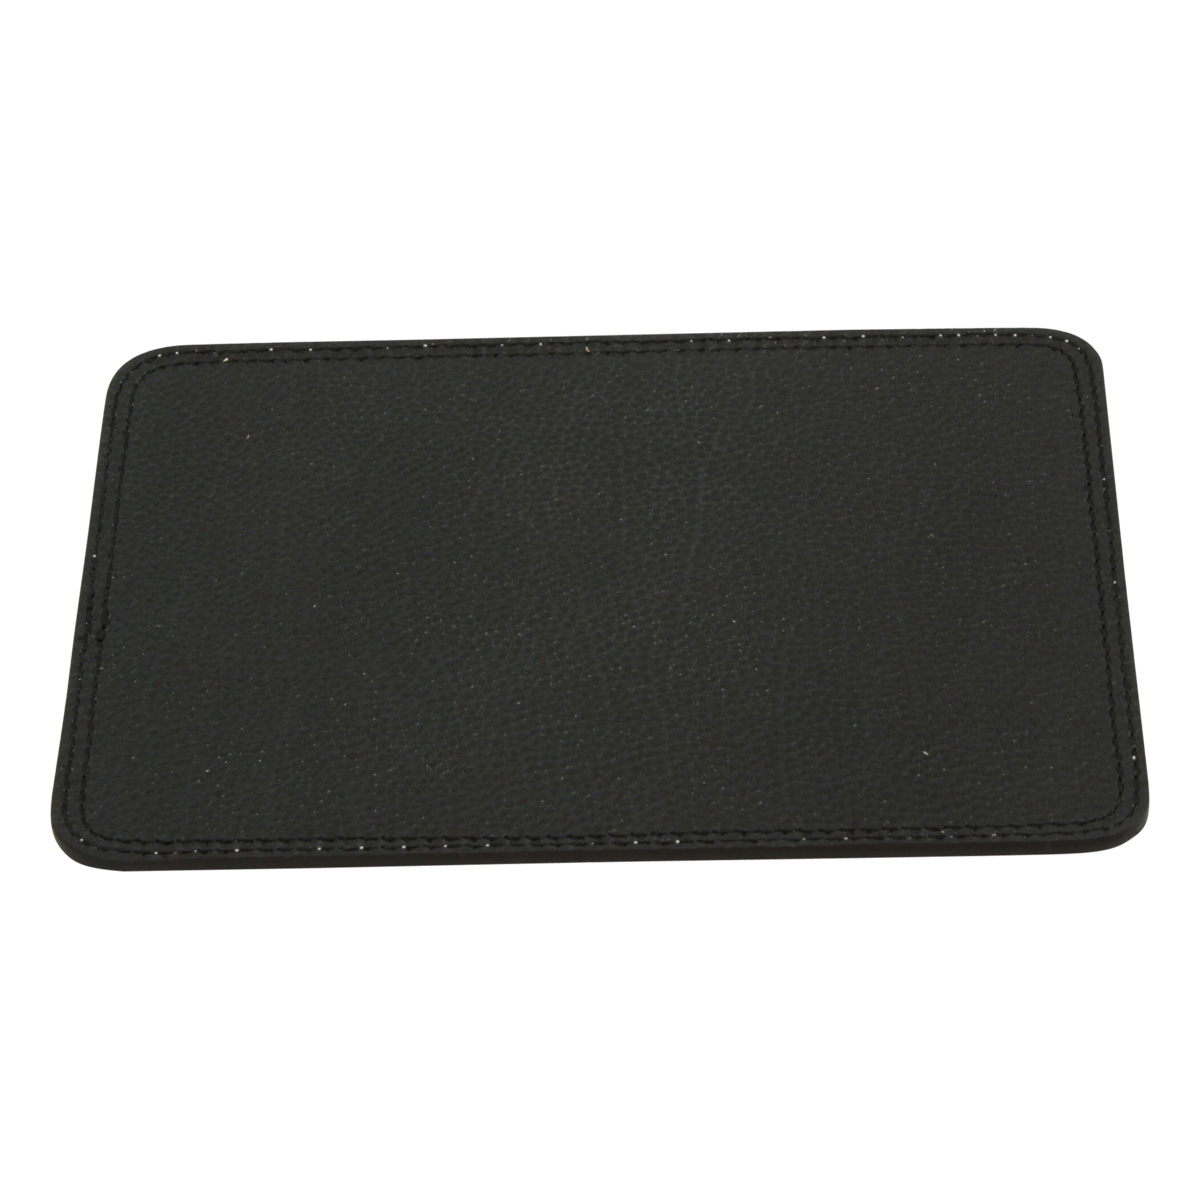 Leather Mouse pad - black | 761051NE UK | Old Angler Firenze